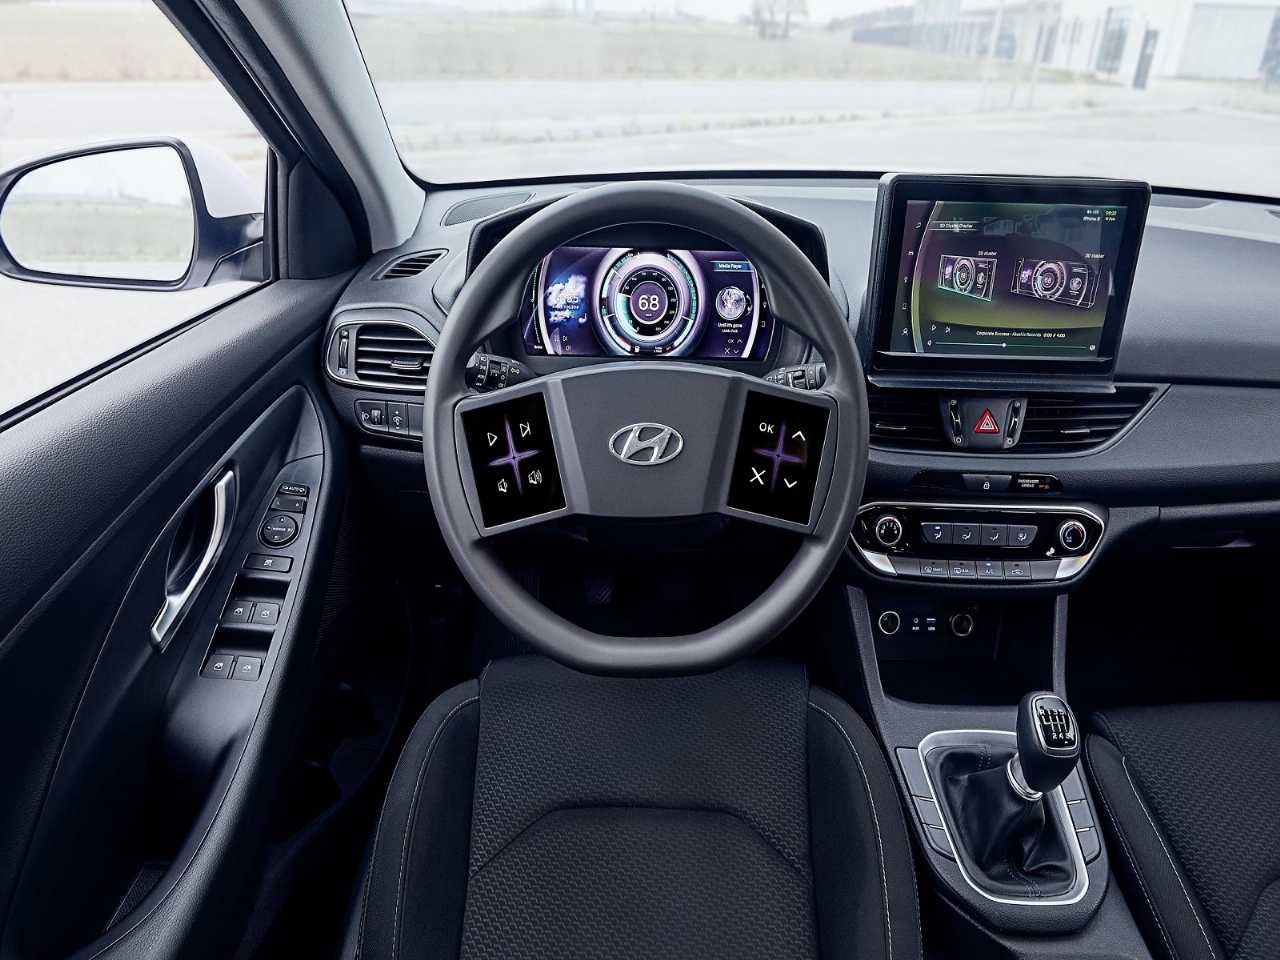 Hyundaii30 2020 - painel